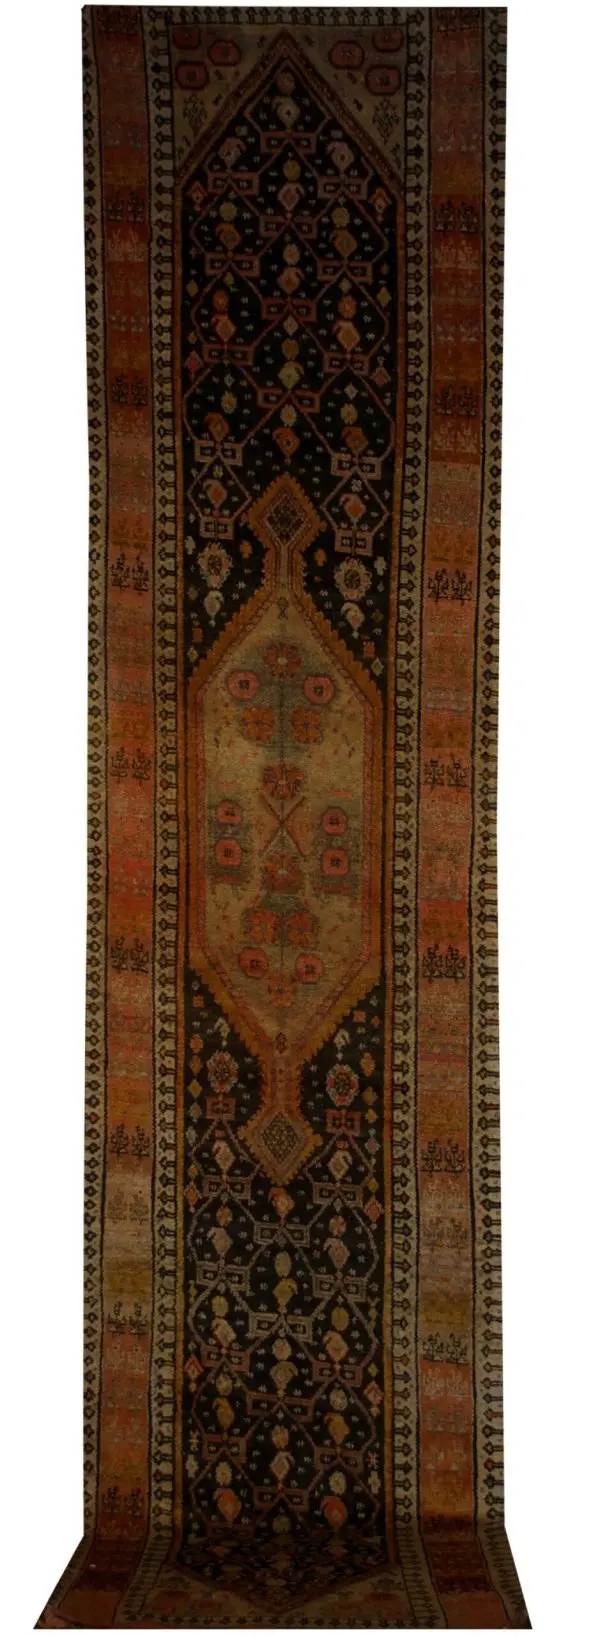 Antique Persian Bakhtiari runner 2' 10" x 11' 6" - Shabahang Royal Carpet